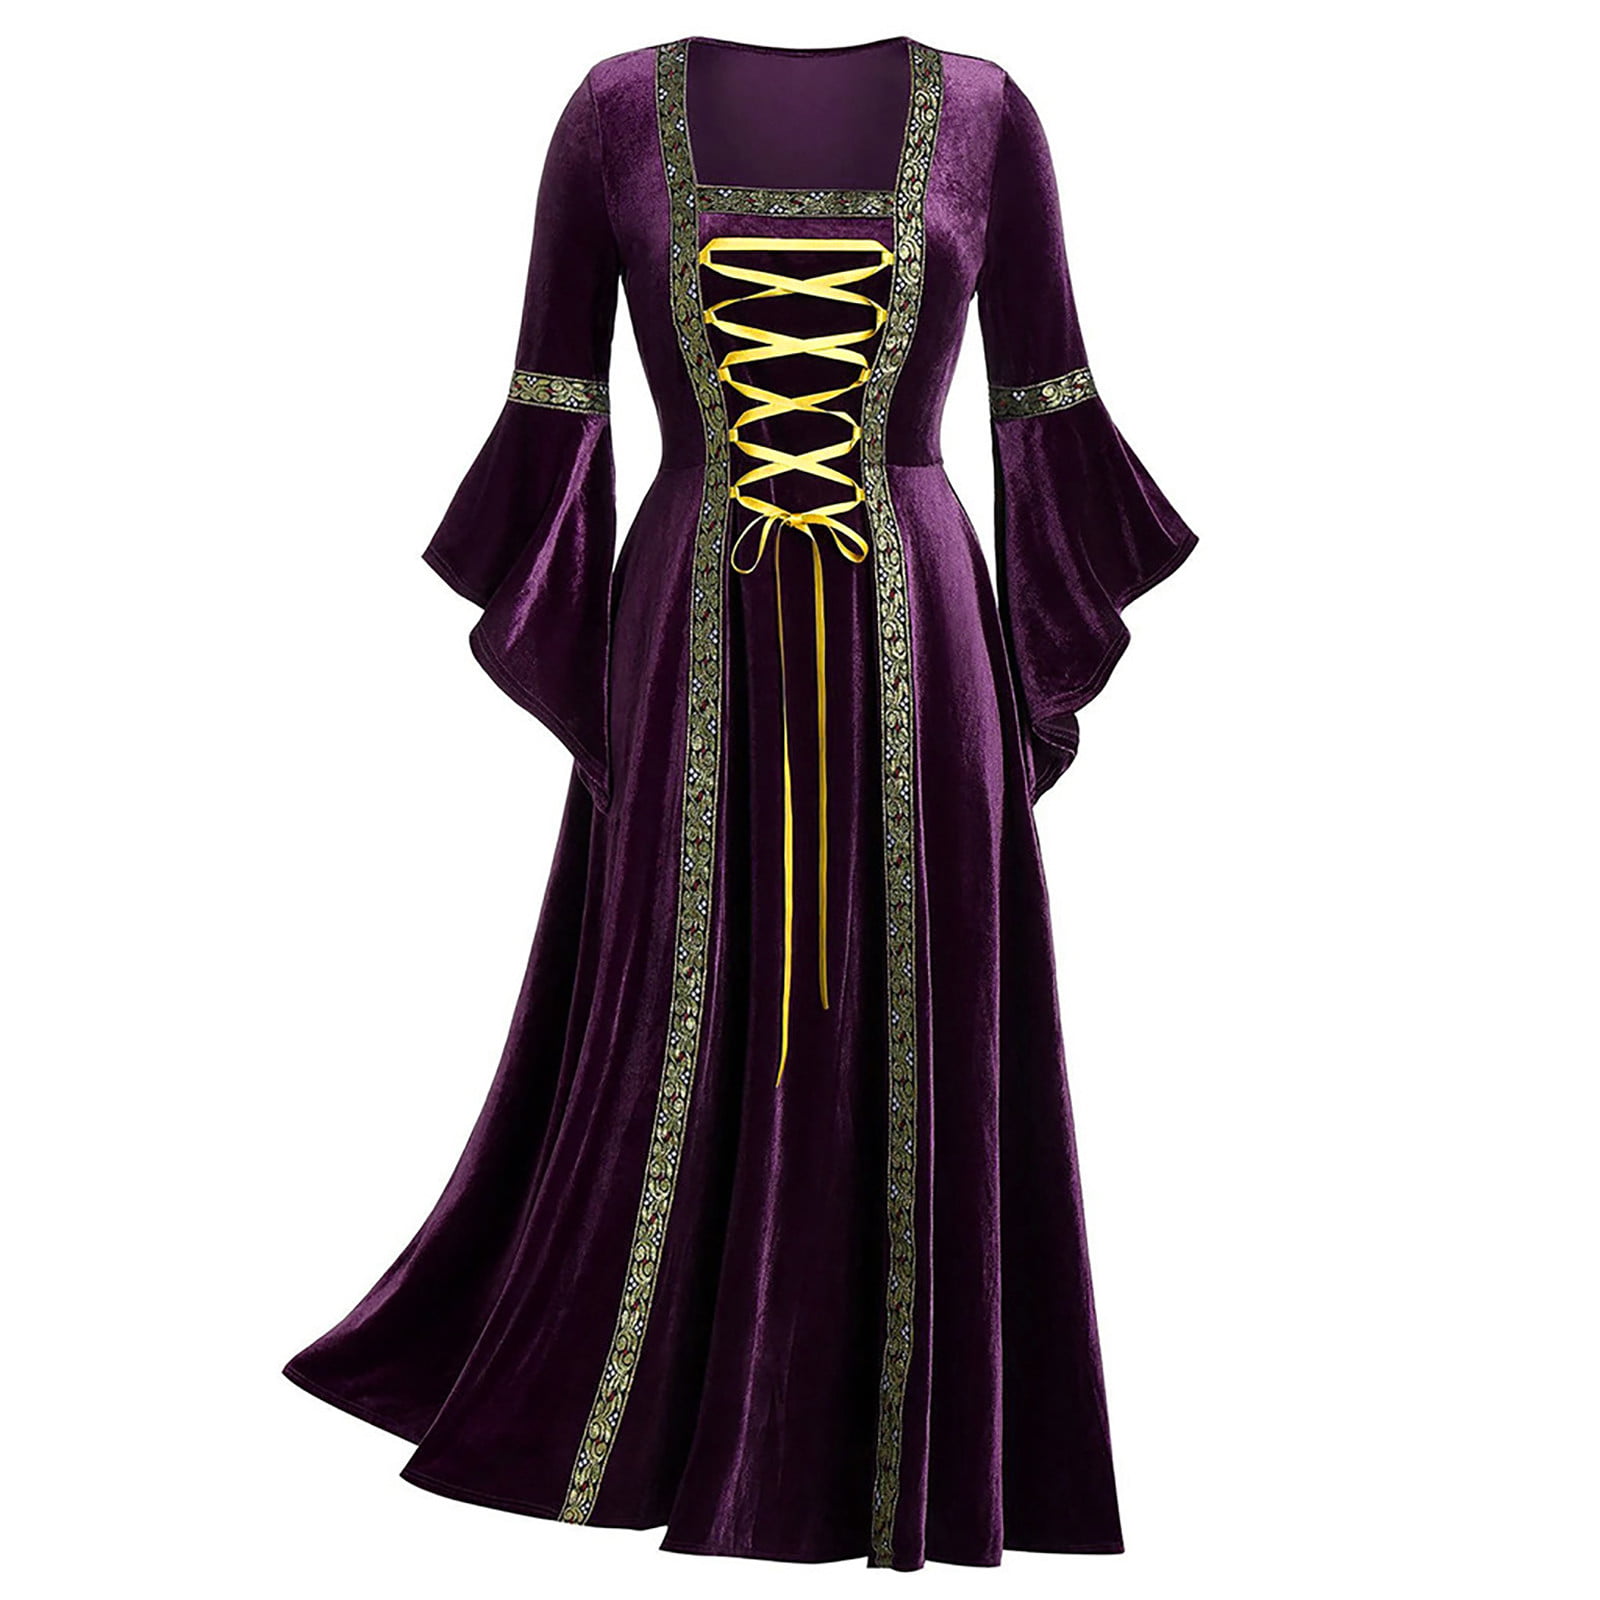 Women's Medieval Renaissance Retro Gown Cosplay Costume Dress 